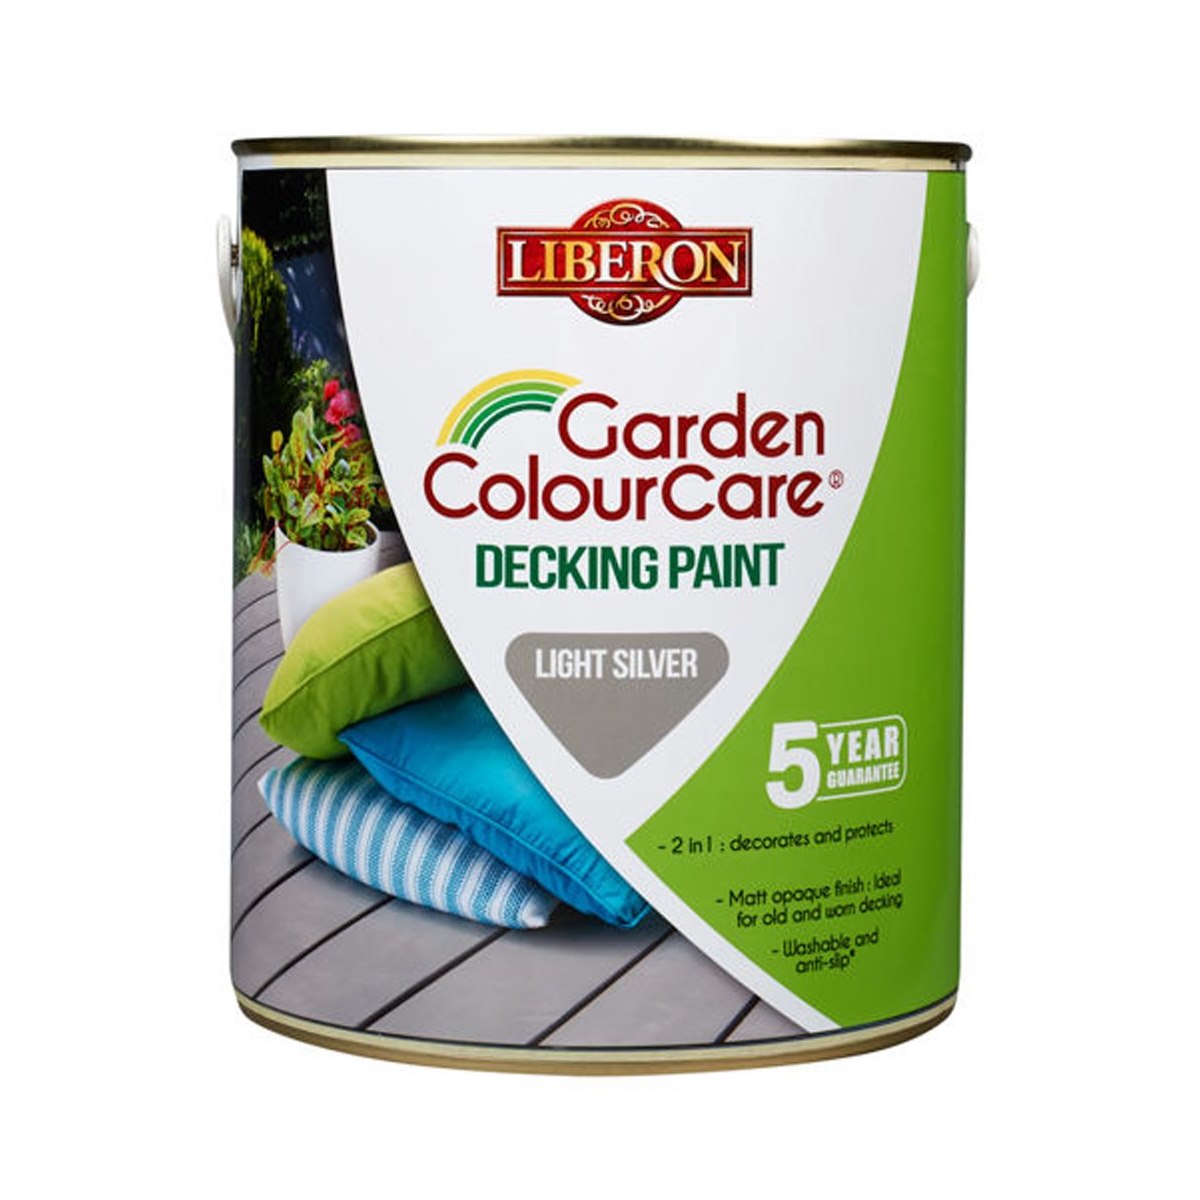 Liberon Garden ColourCare Decking Paint Light Silver 2.5 Litre